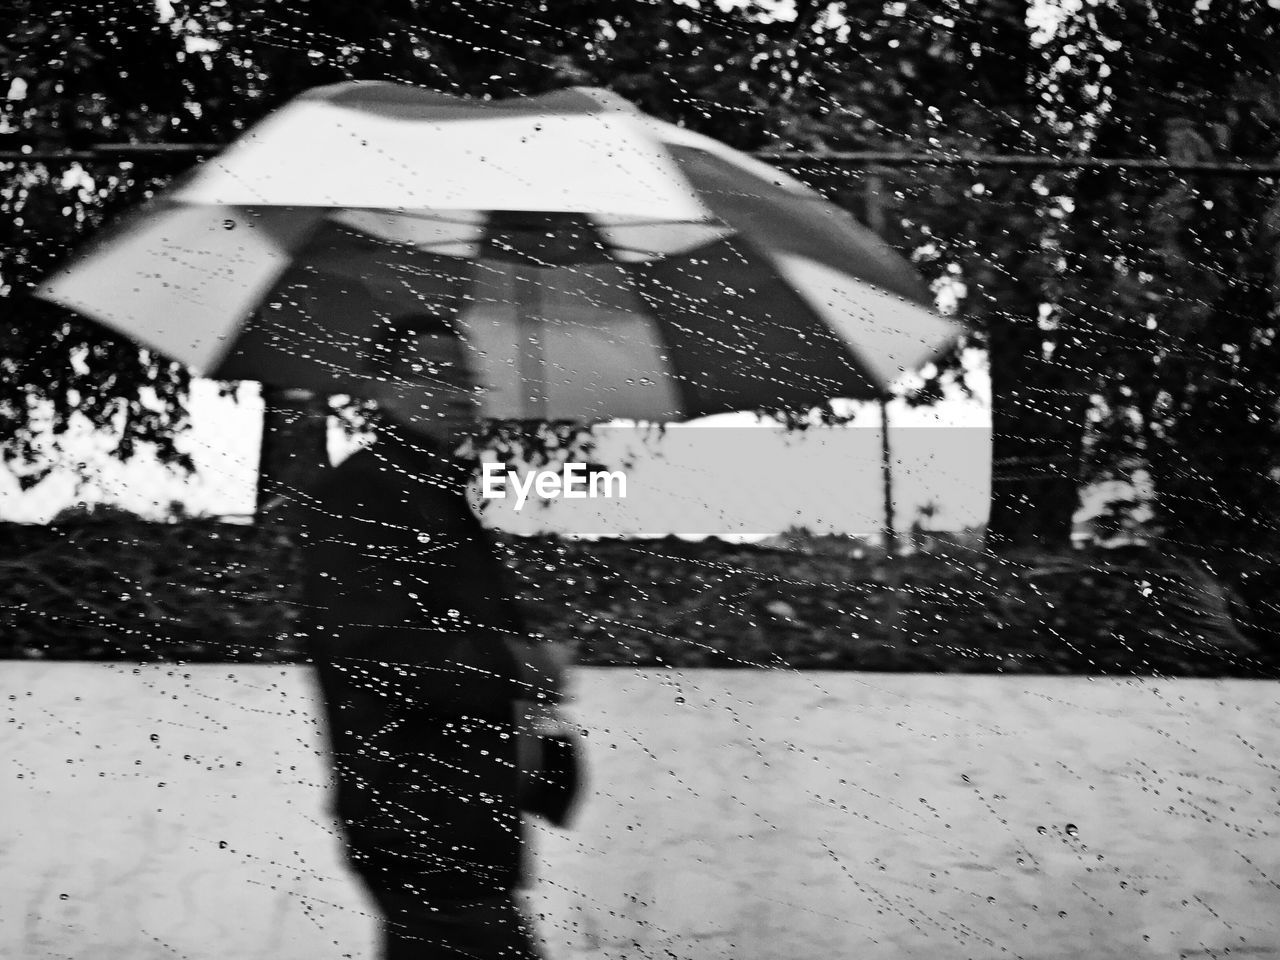 Man with umbrella seen through glass window during rainy season